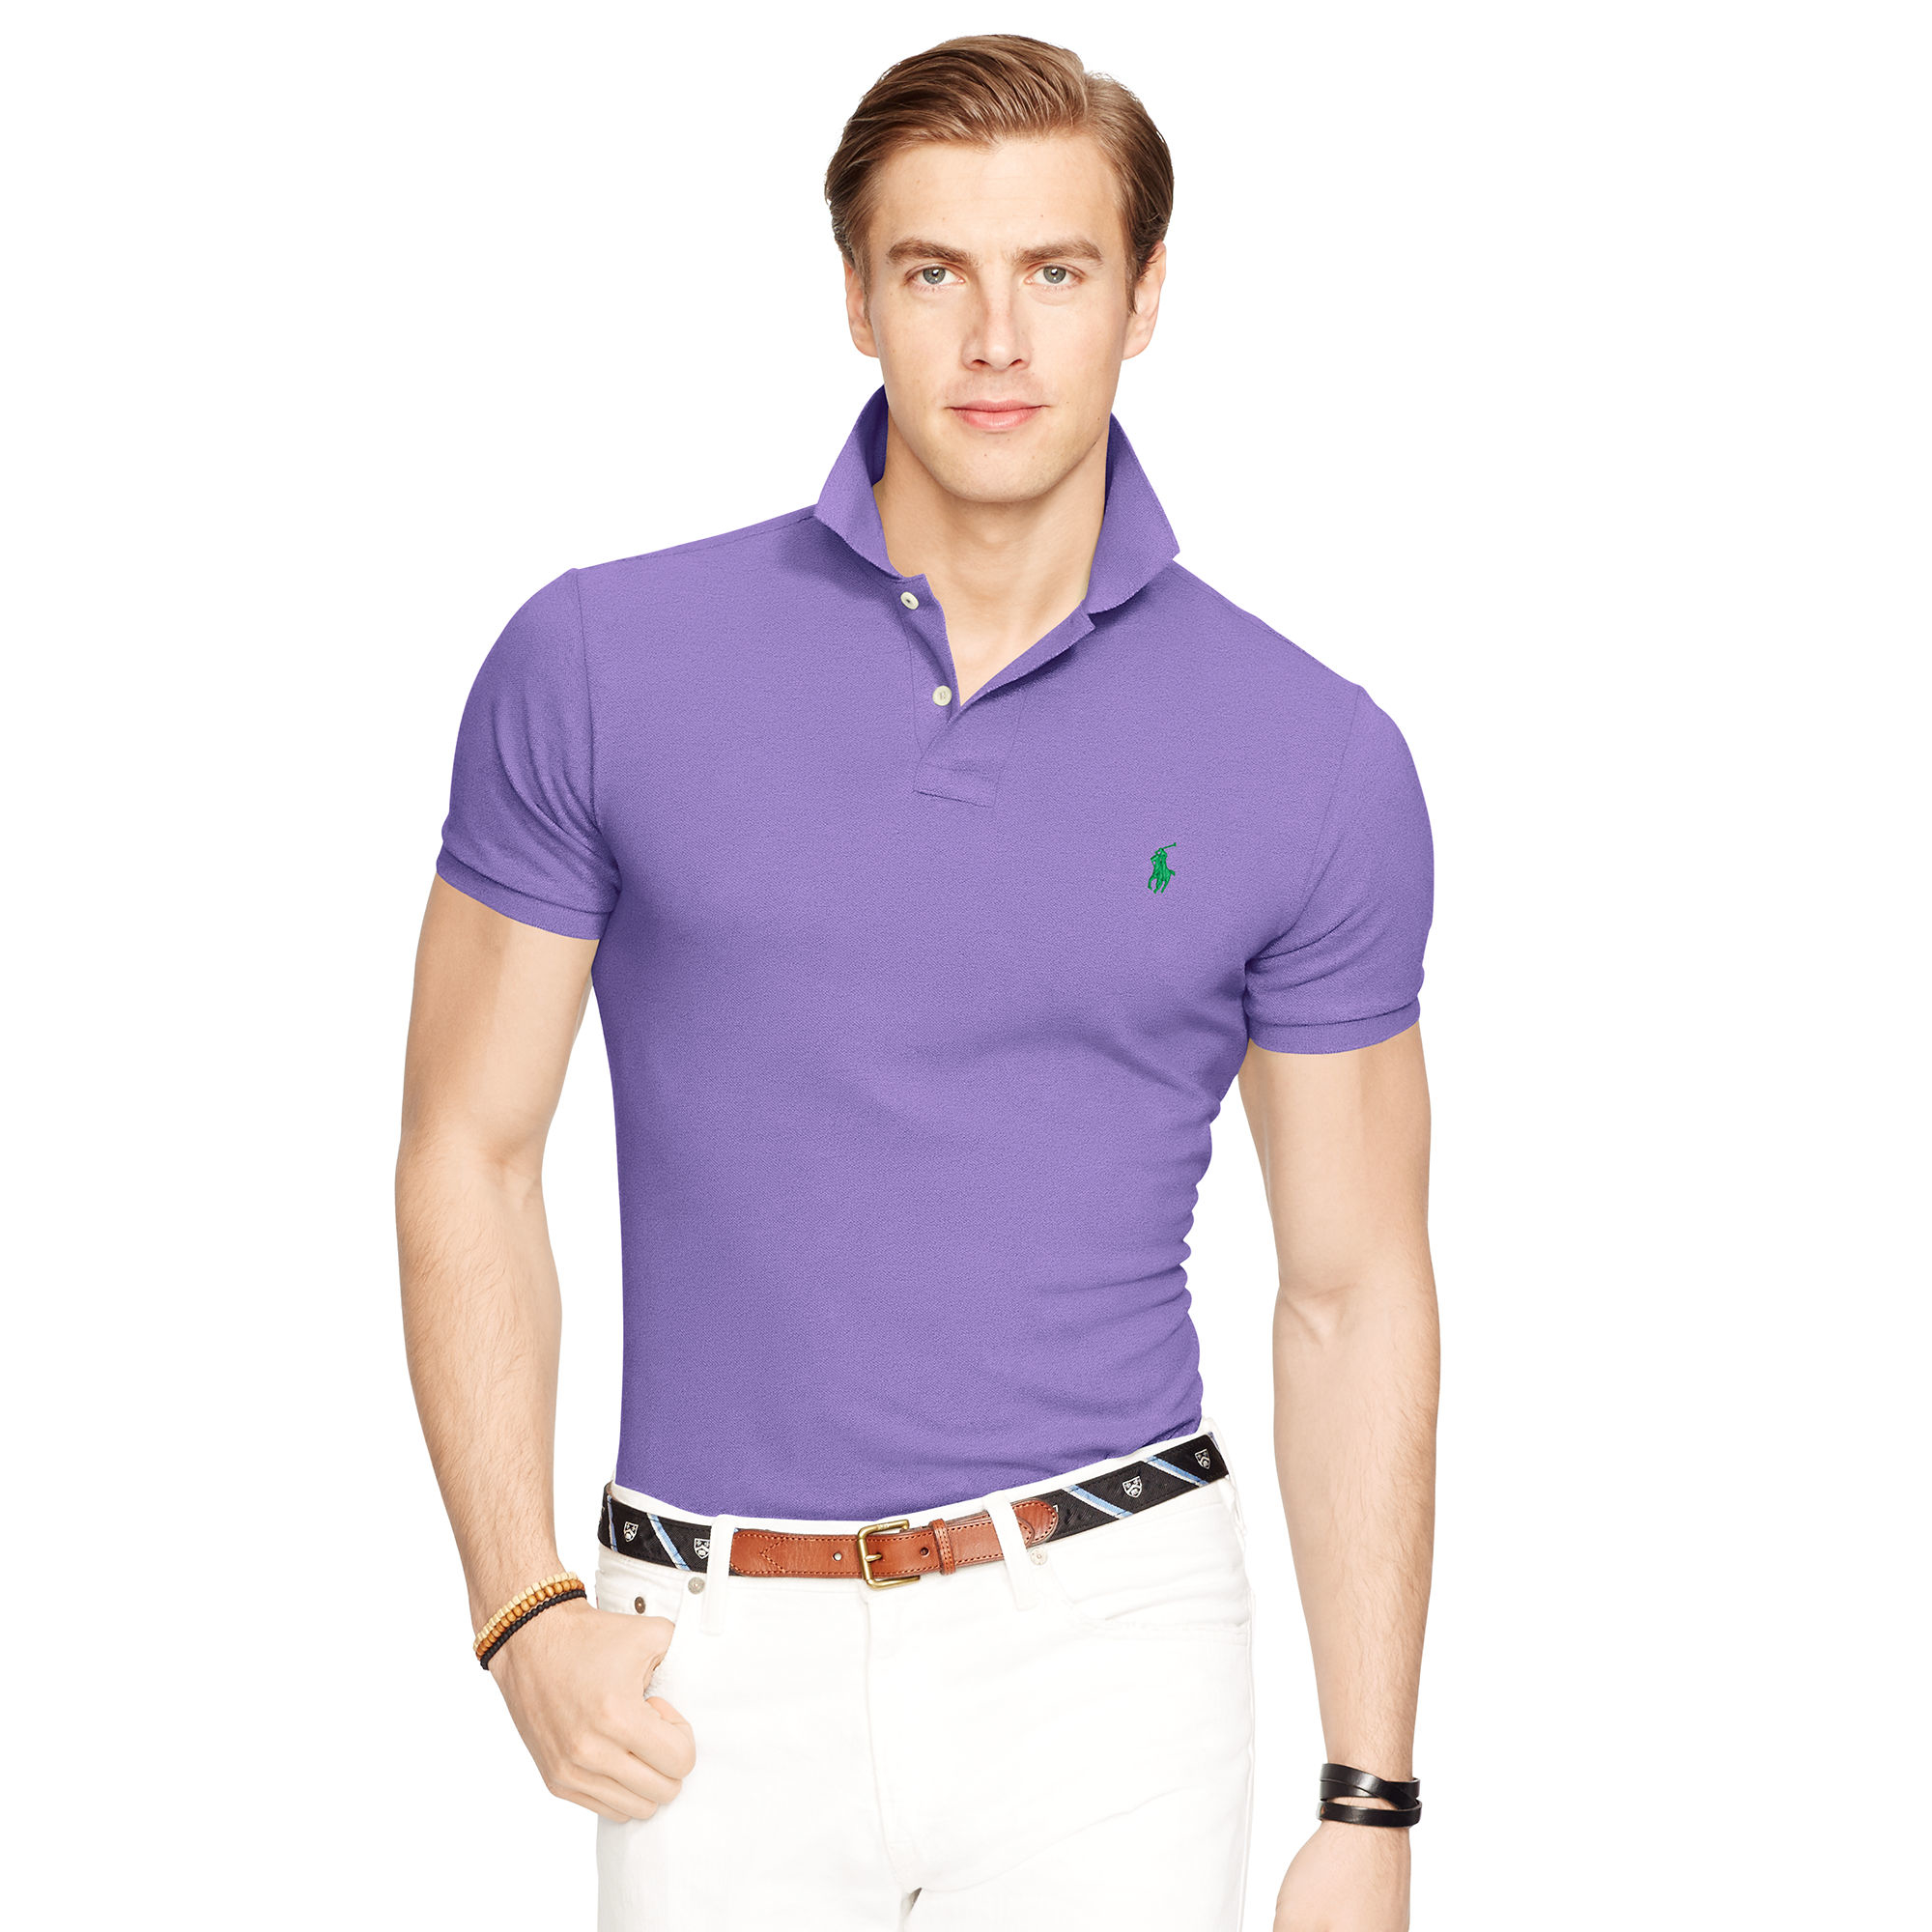 Polo Ralph Lauren Cotton Slim-fit Mesh Polo Shirt in Purple for Men - Lyst